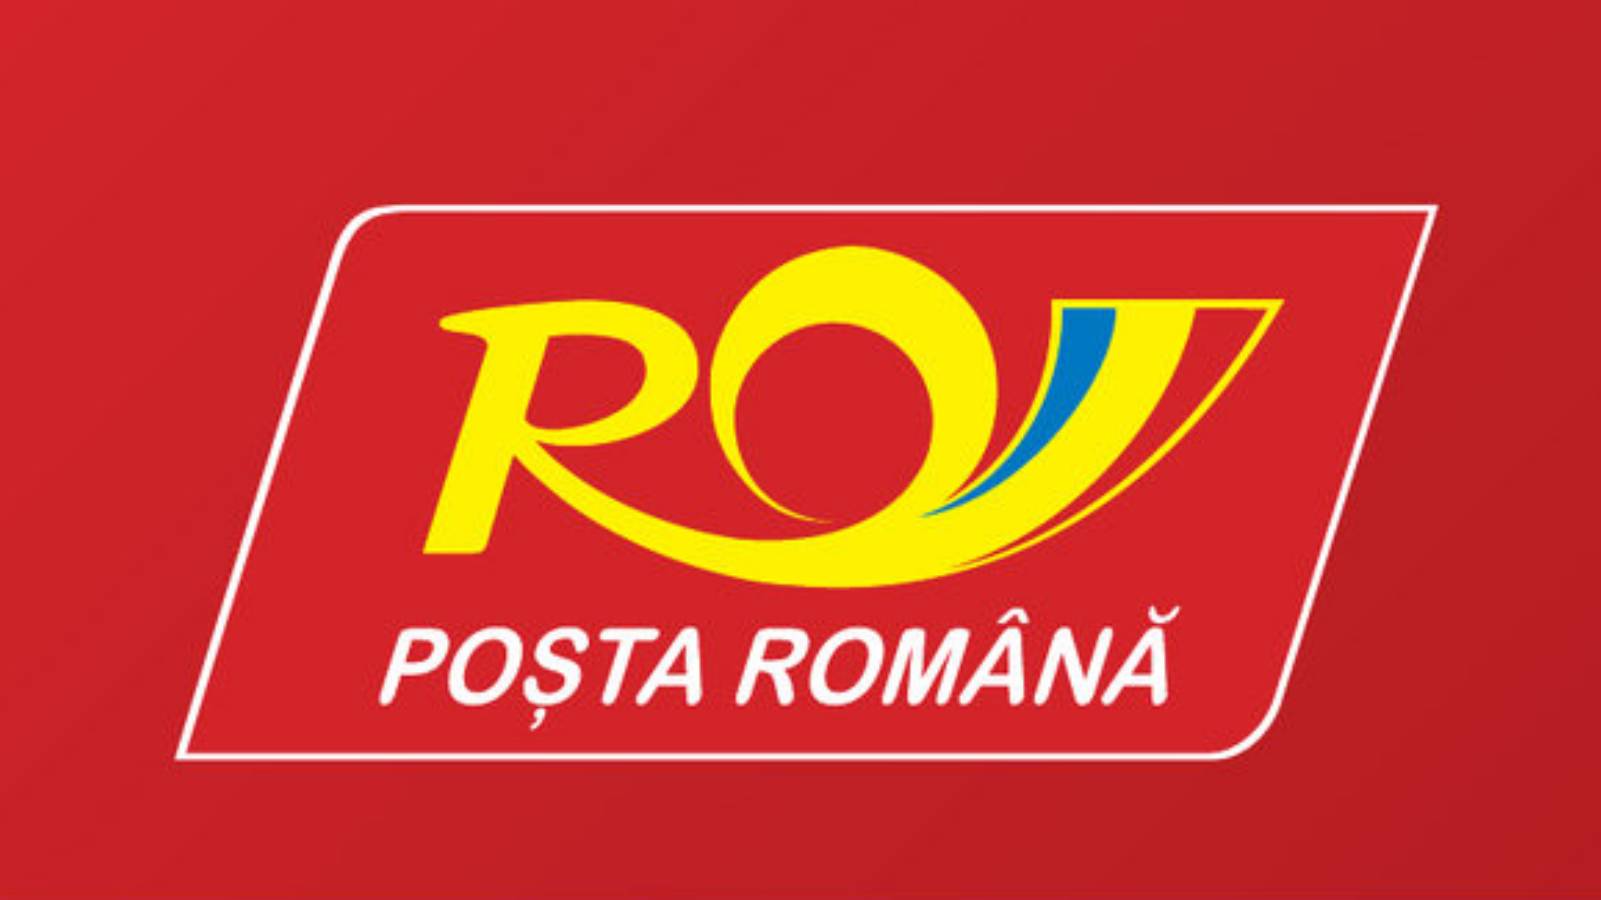 the Romanian post office sends money to Romania